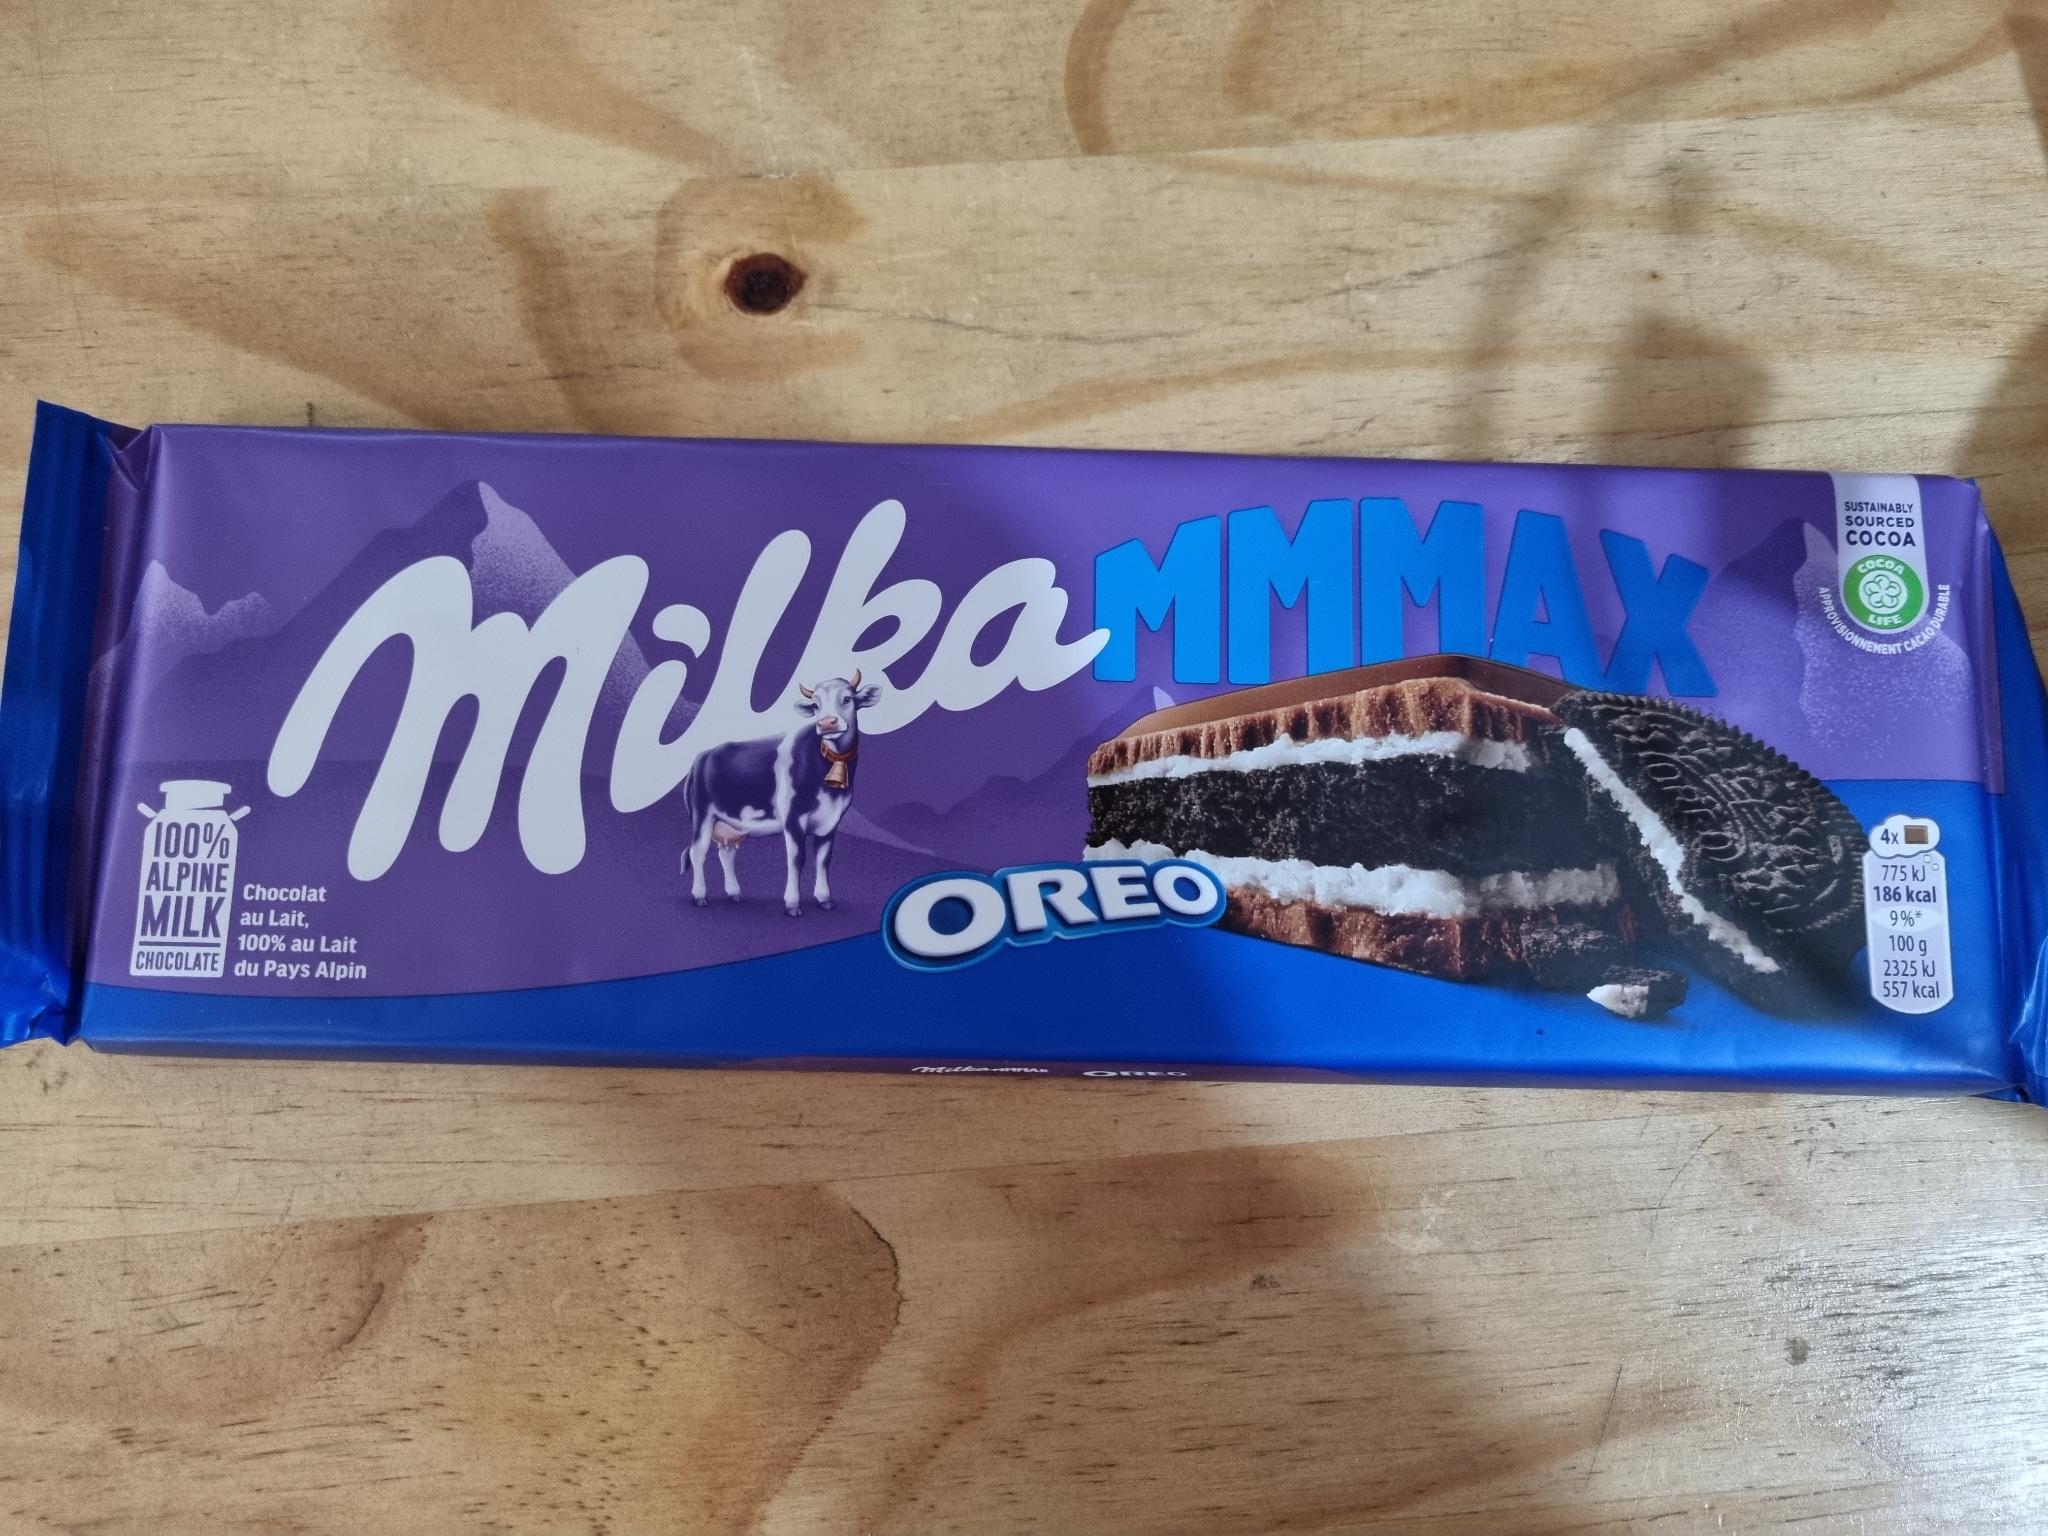 Milka MMMAX Oreo - Milk Chocolate & Oreo